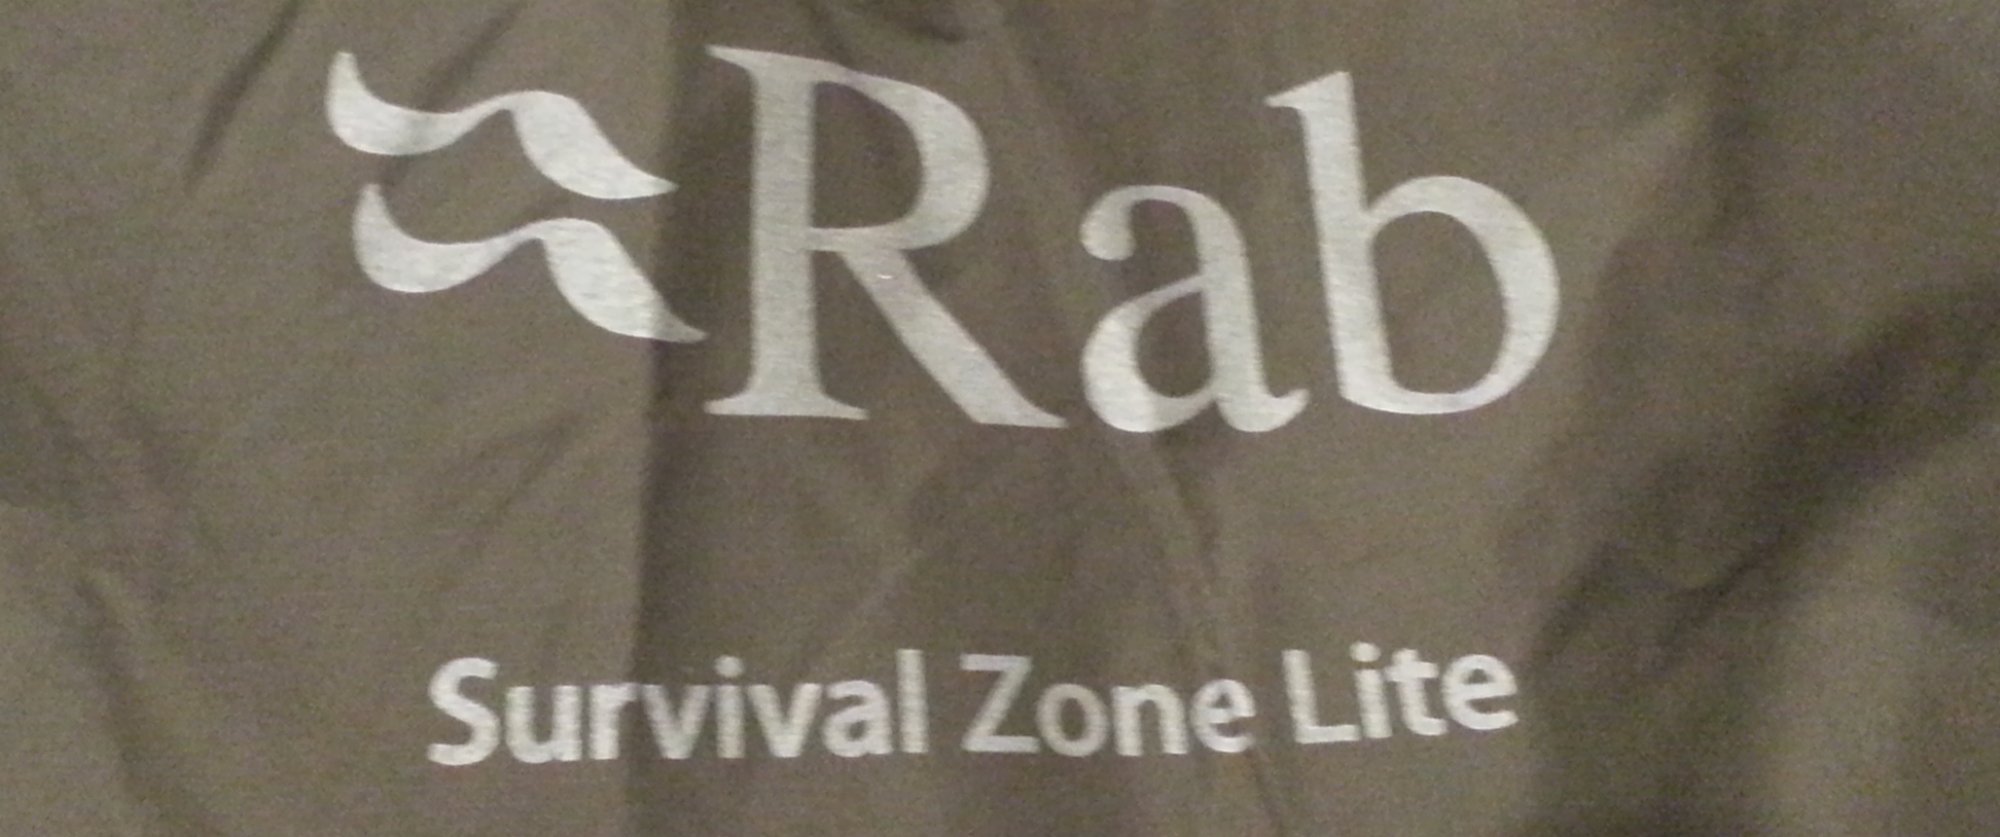 Rab survival zone lite